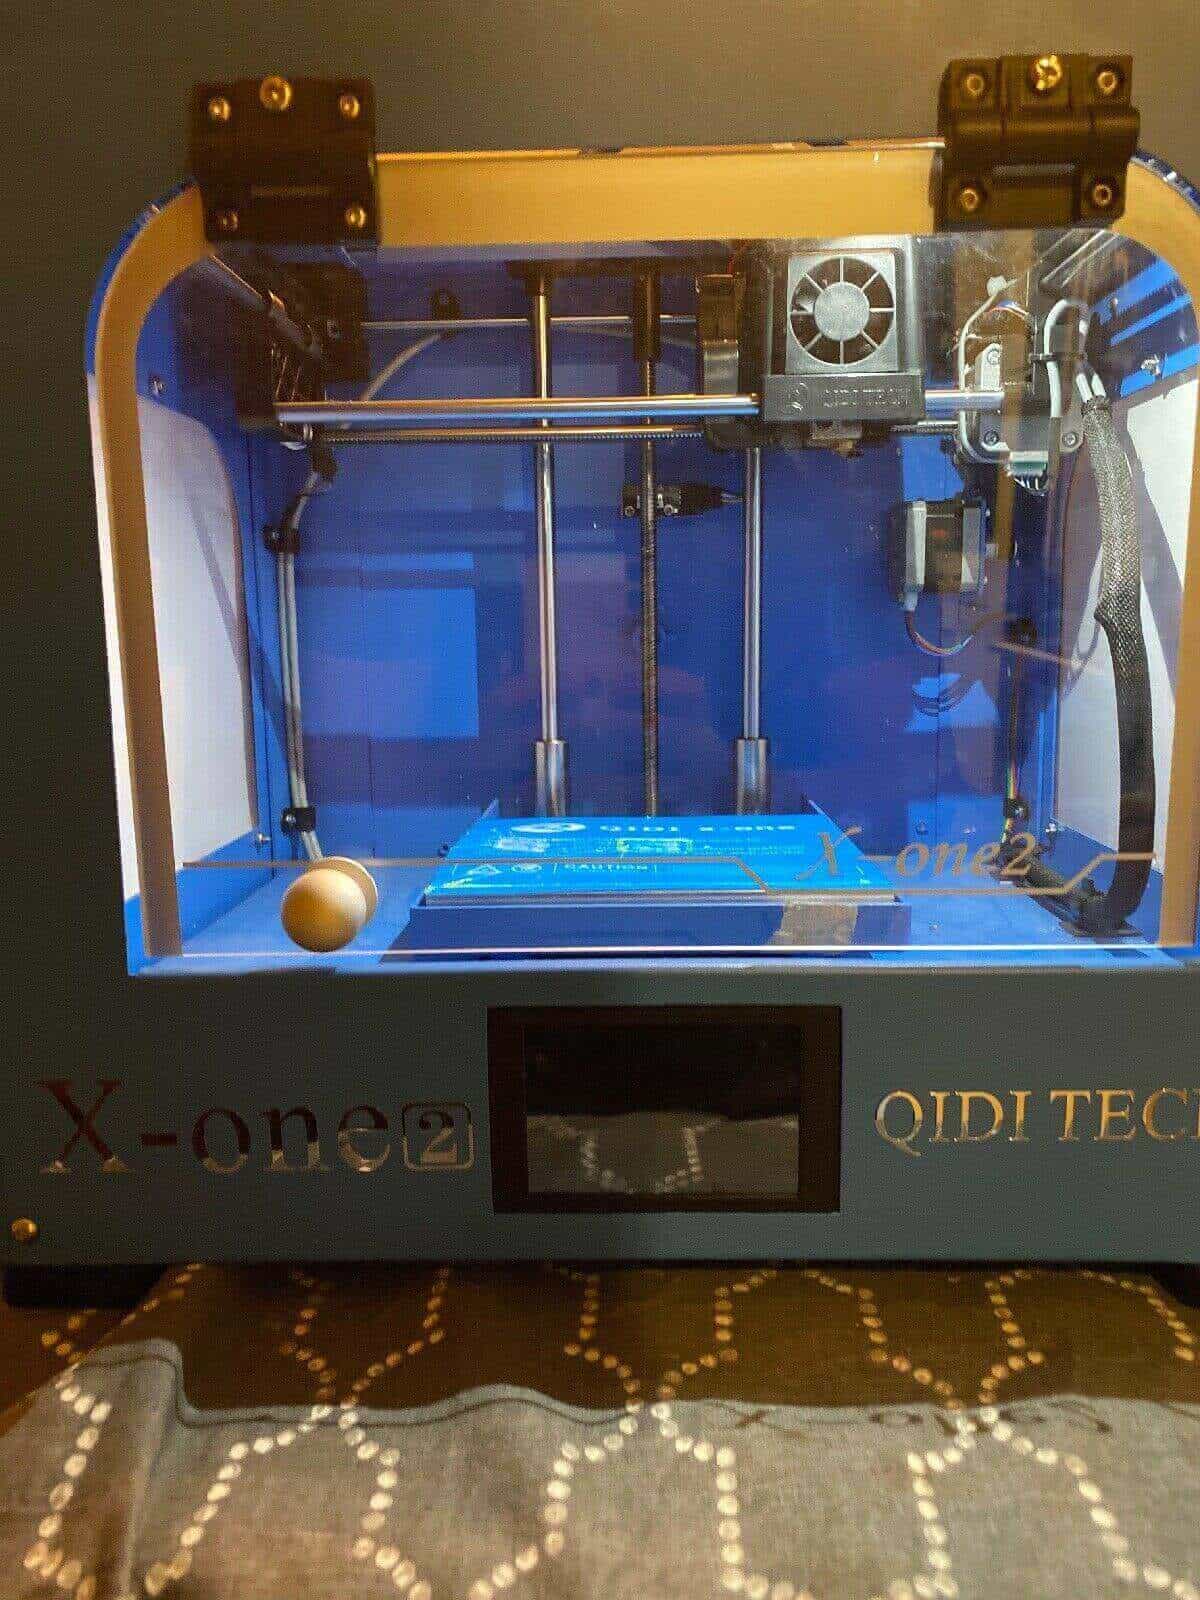 QIDI Technology X-One2 3D Printer